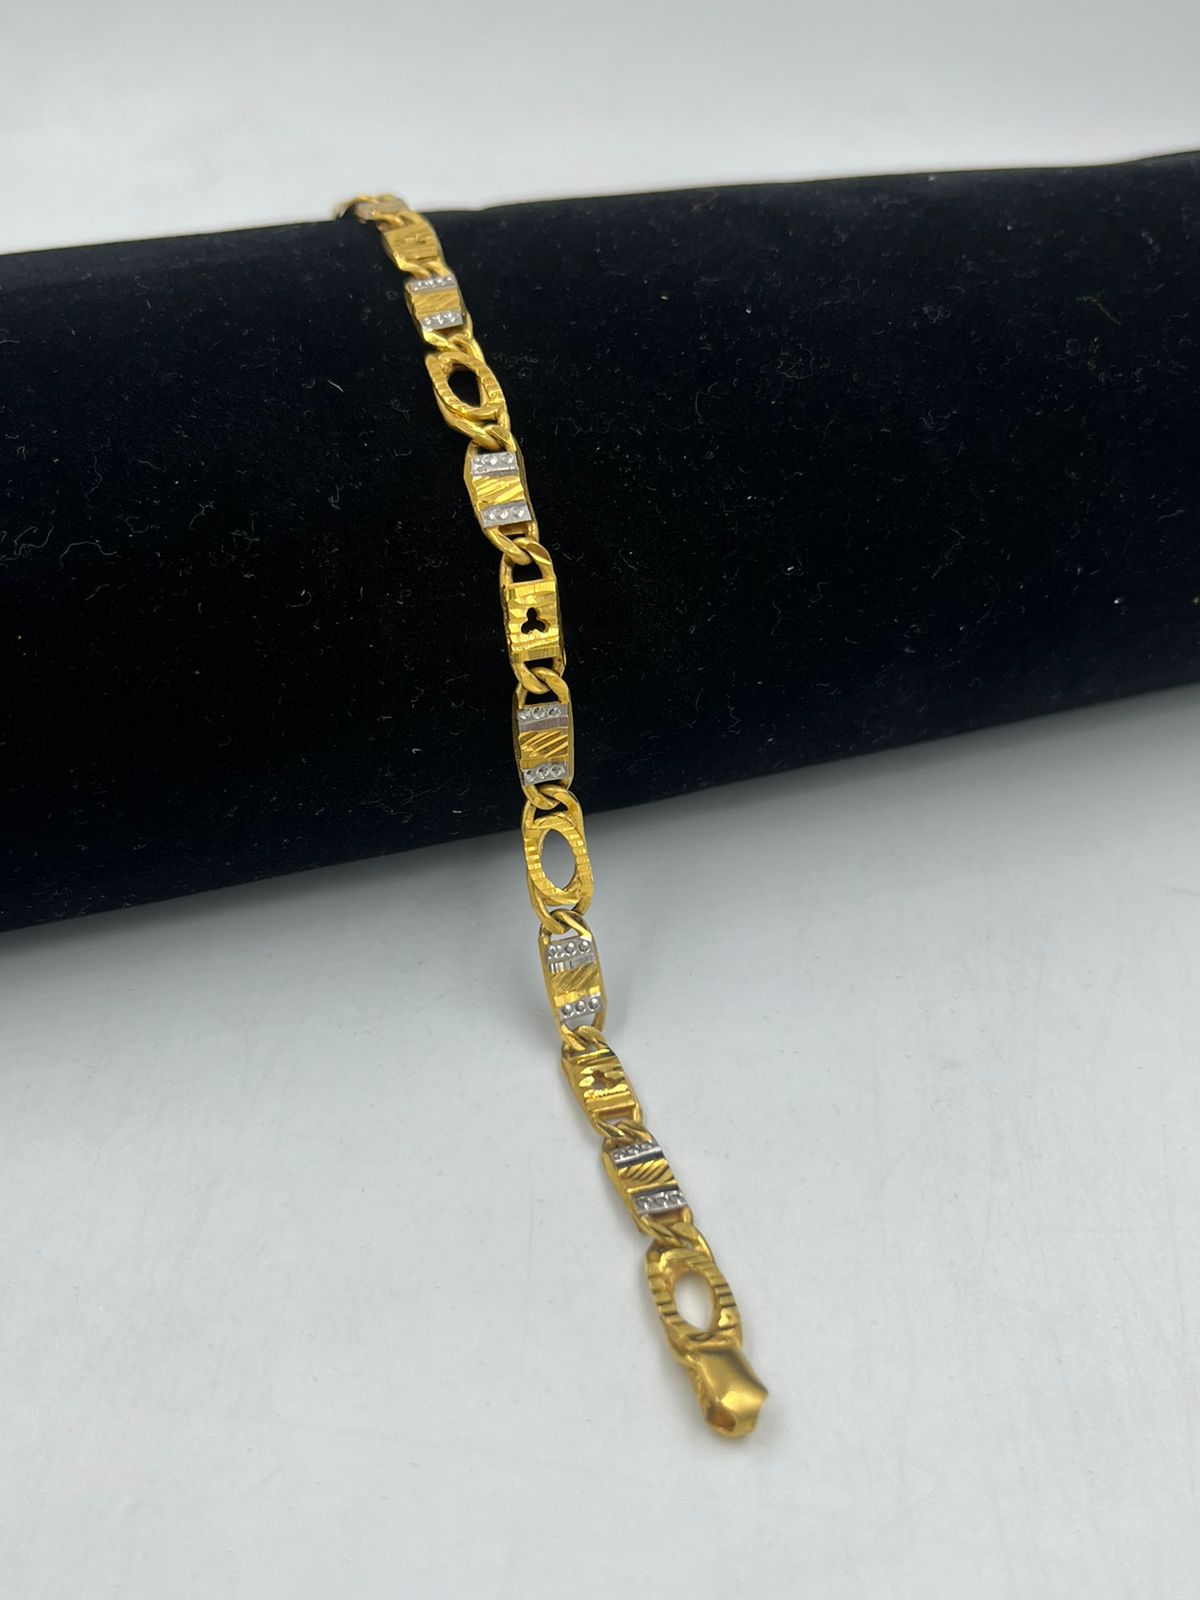 1 Gram Gold Forming Stylish Design Best Quality Nawabi Bracelet for Men -  Style B874 #1gramgoldjewellery #late… | Bracelets for men, Mens fashion,  Bracelet designs